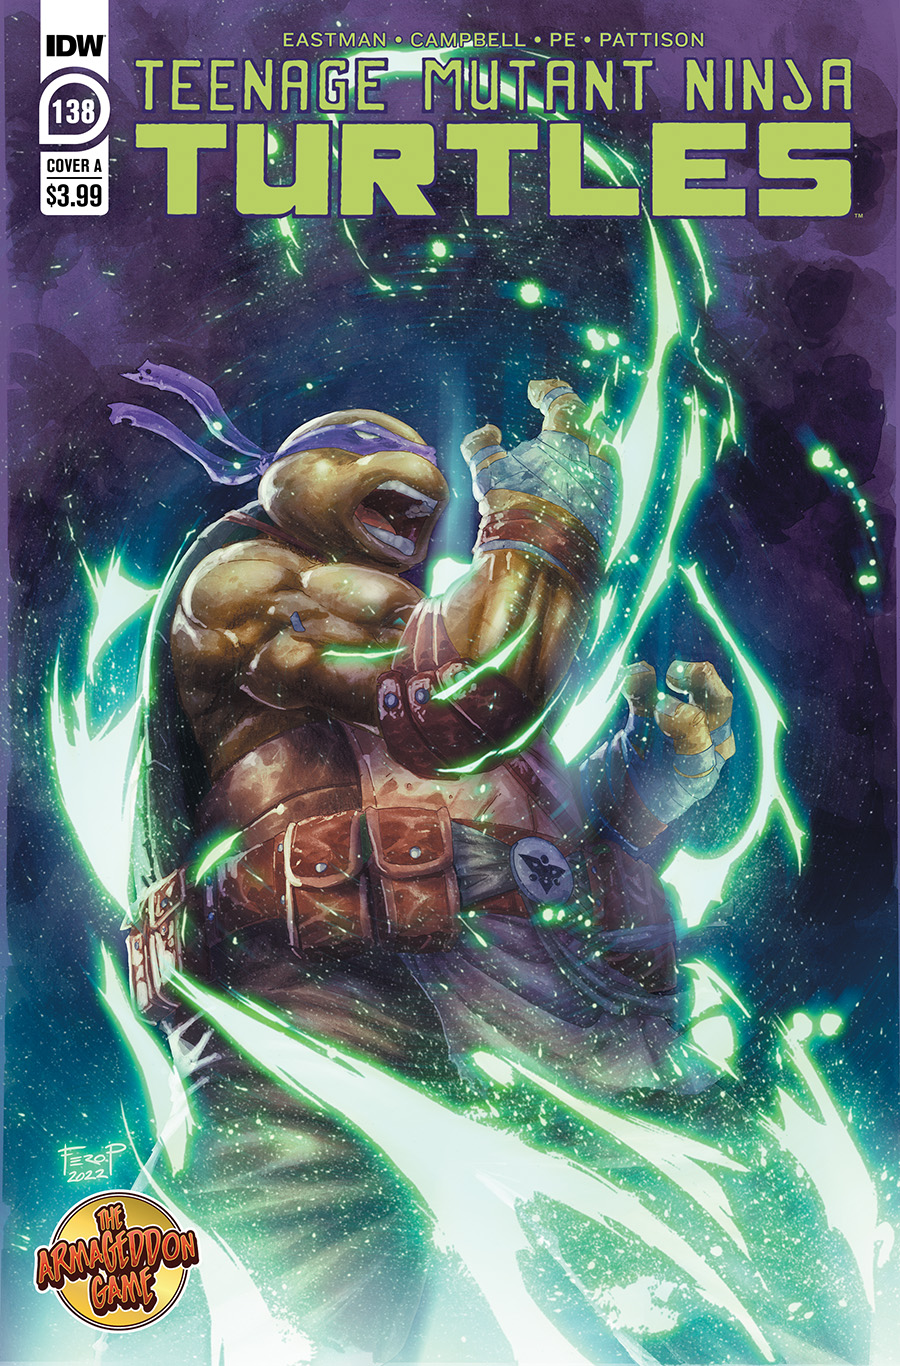 Teenage Mutant Ninja Turtles Vol 5 #138 Cover A Regular Fero Pe Cover